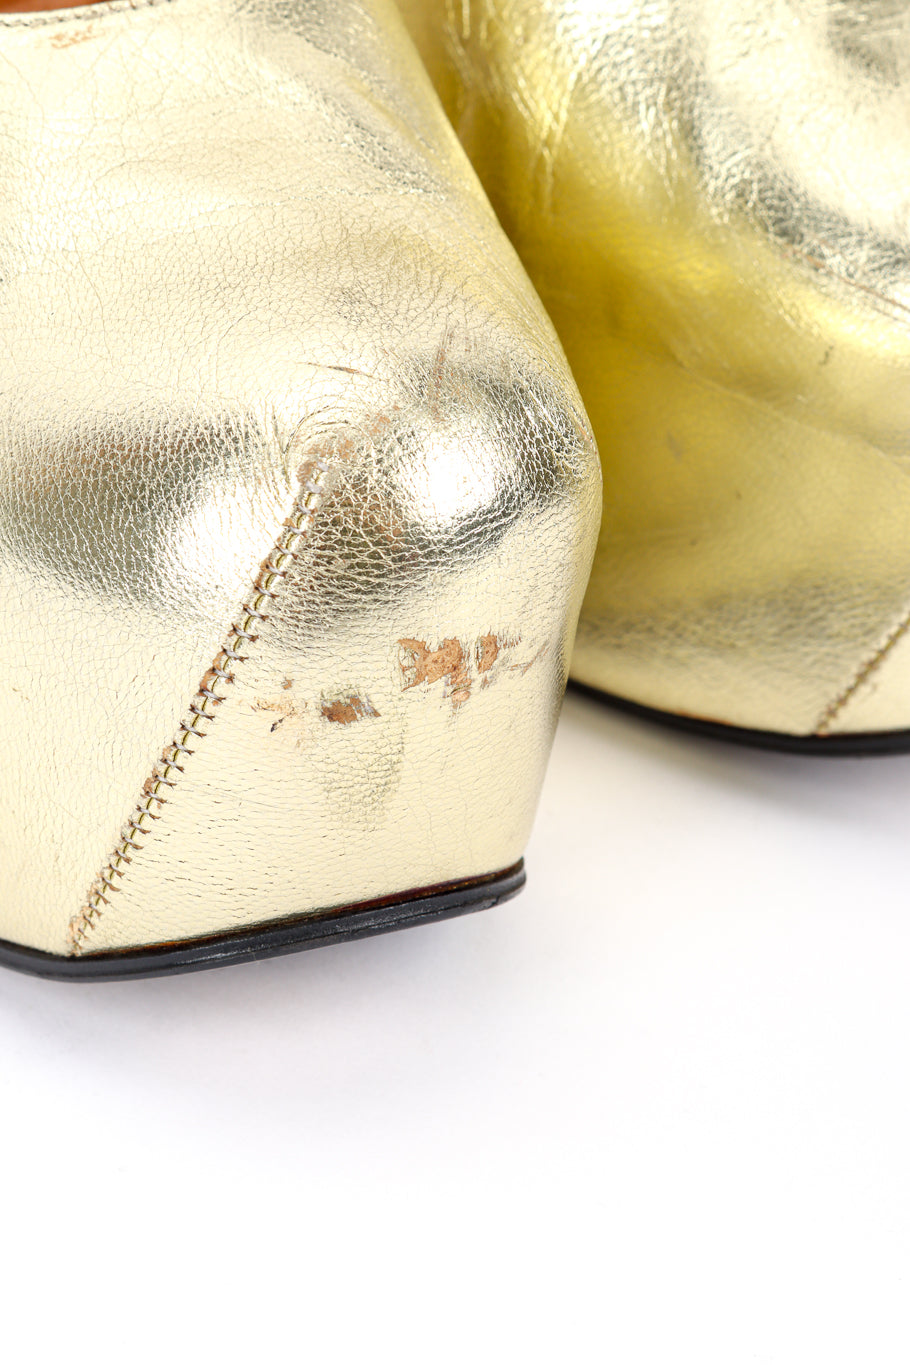 Vintage Vivienne Westwood 1993 F/W Metallic Gold Elevated Court Shoe right toe closeup @recessla